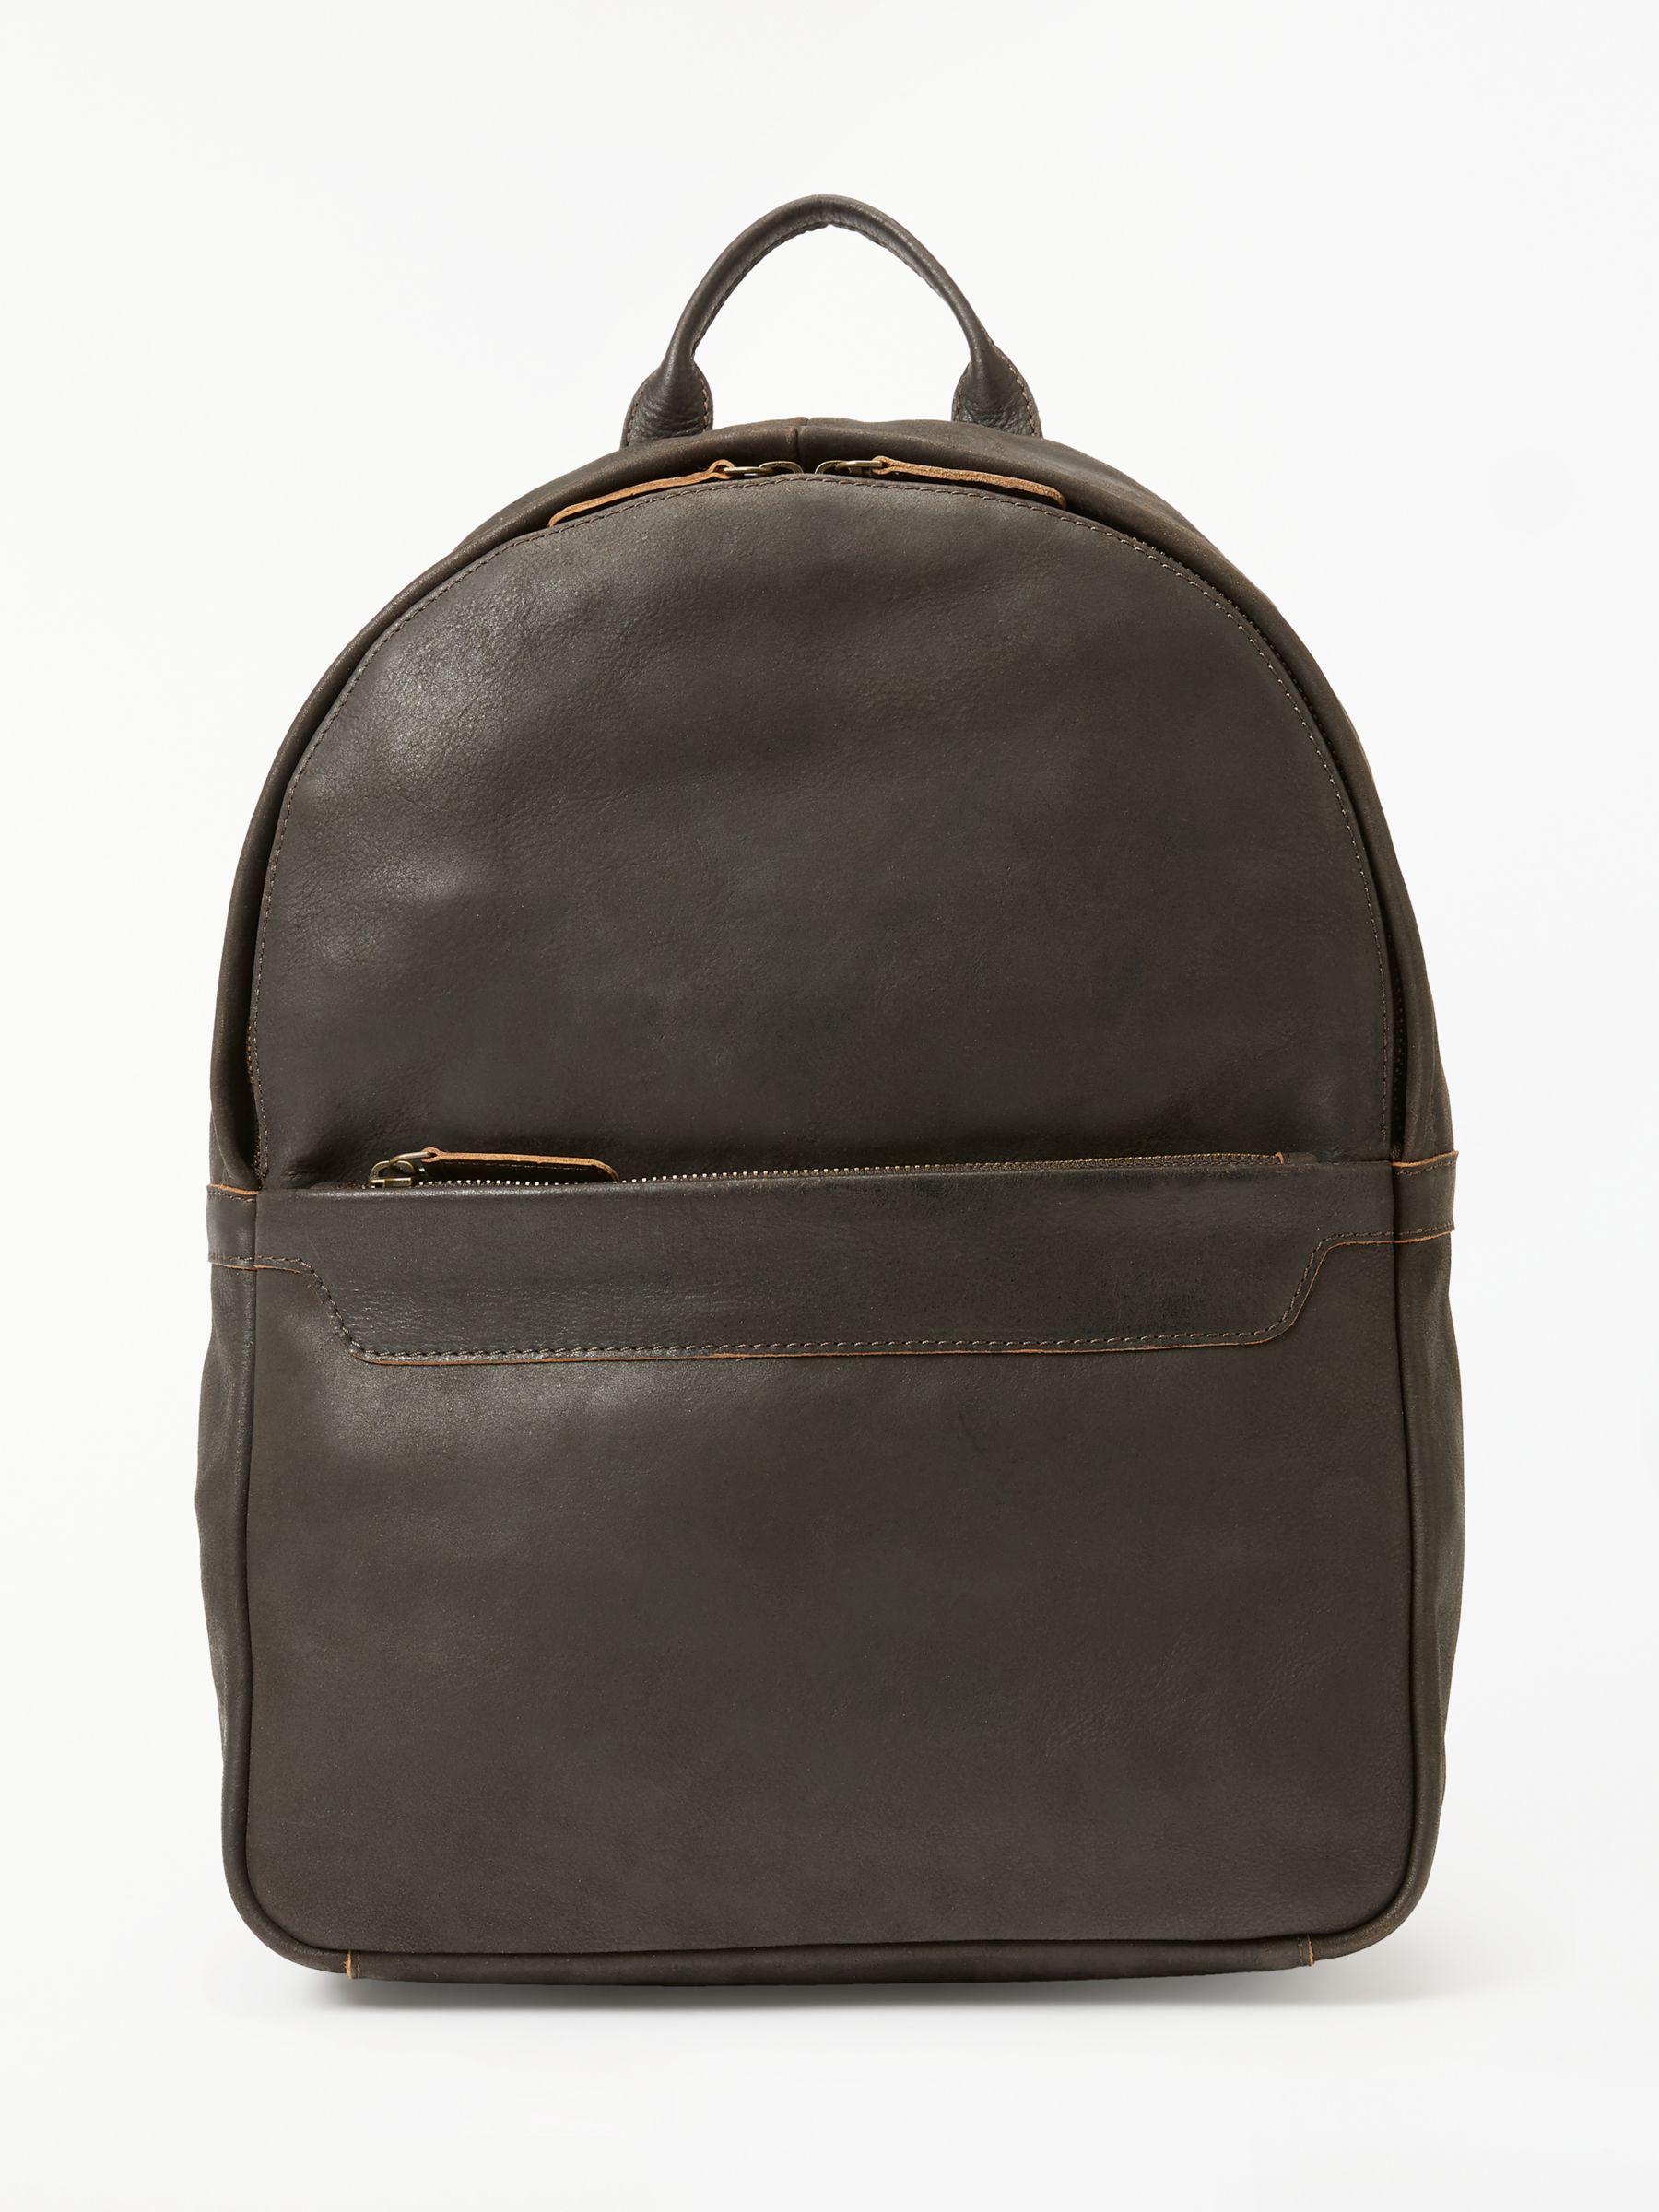 John Lewis & Partners Toronto Leather Backpack, Brown at John Lewis & Partners